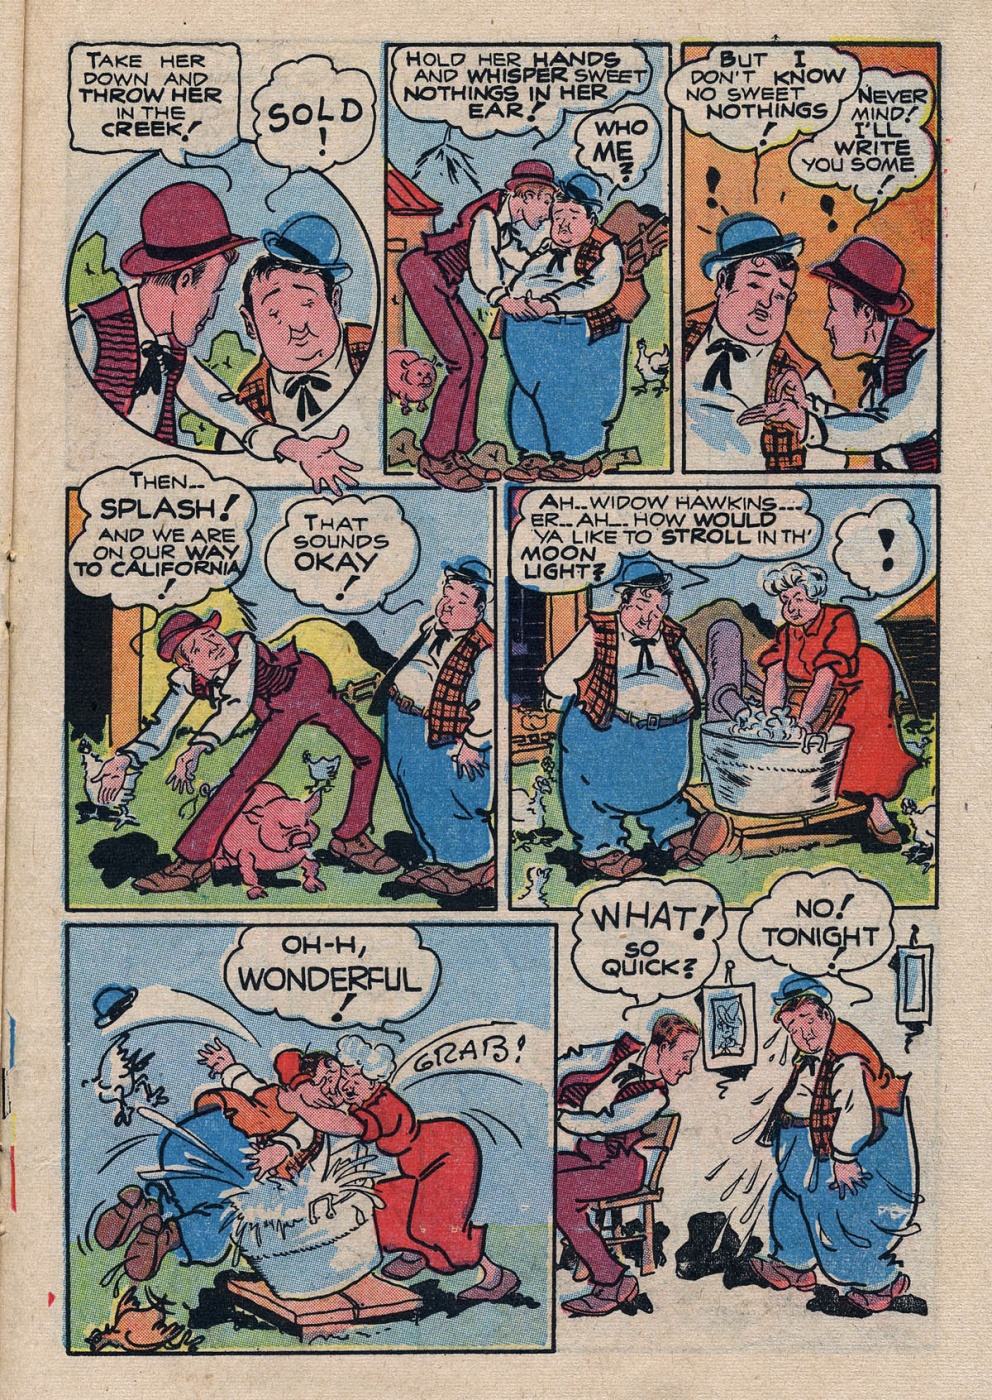 Funny Comic Strips - Abbott and Costello 001 (Feb 1948) 21